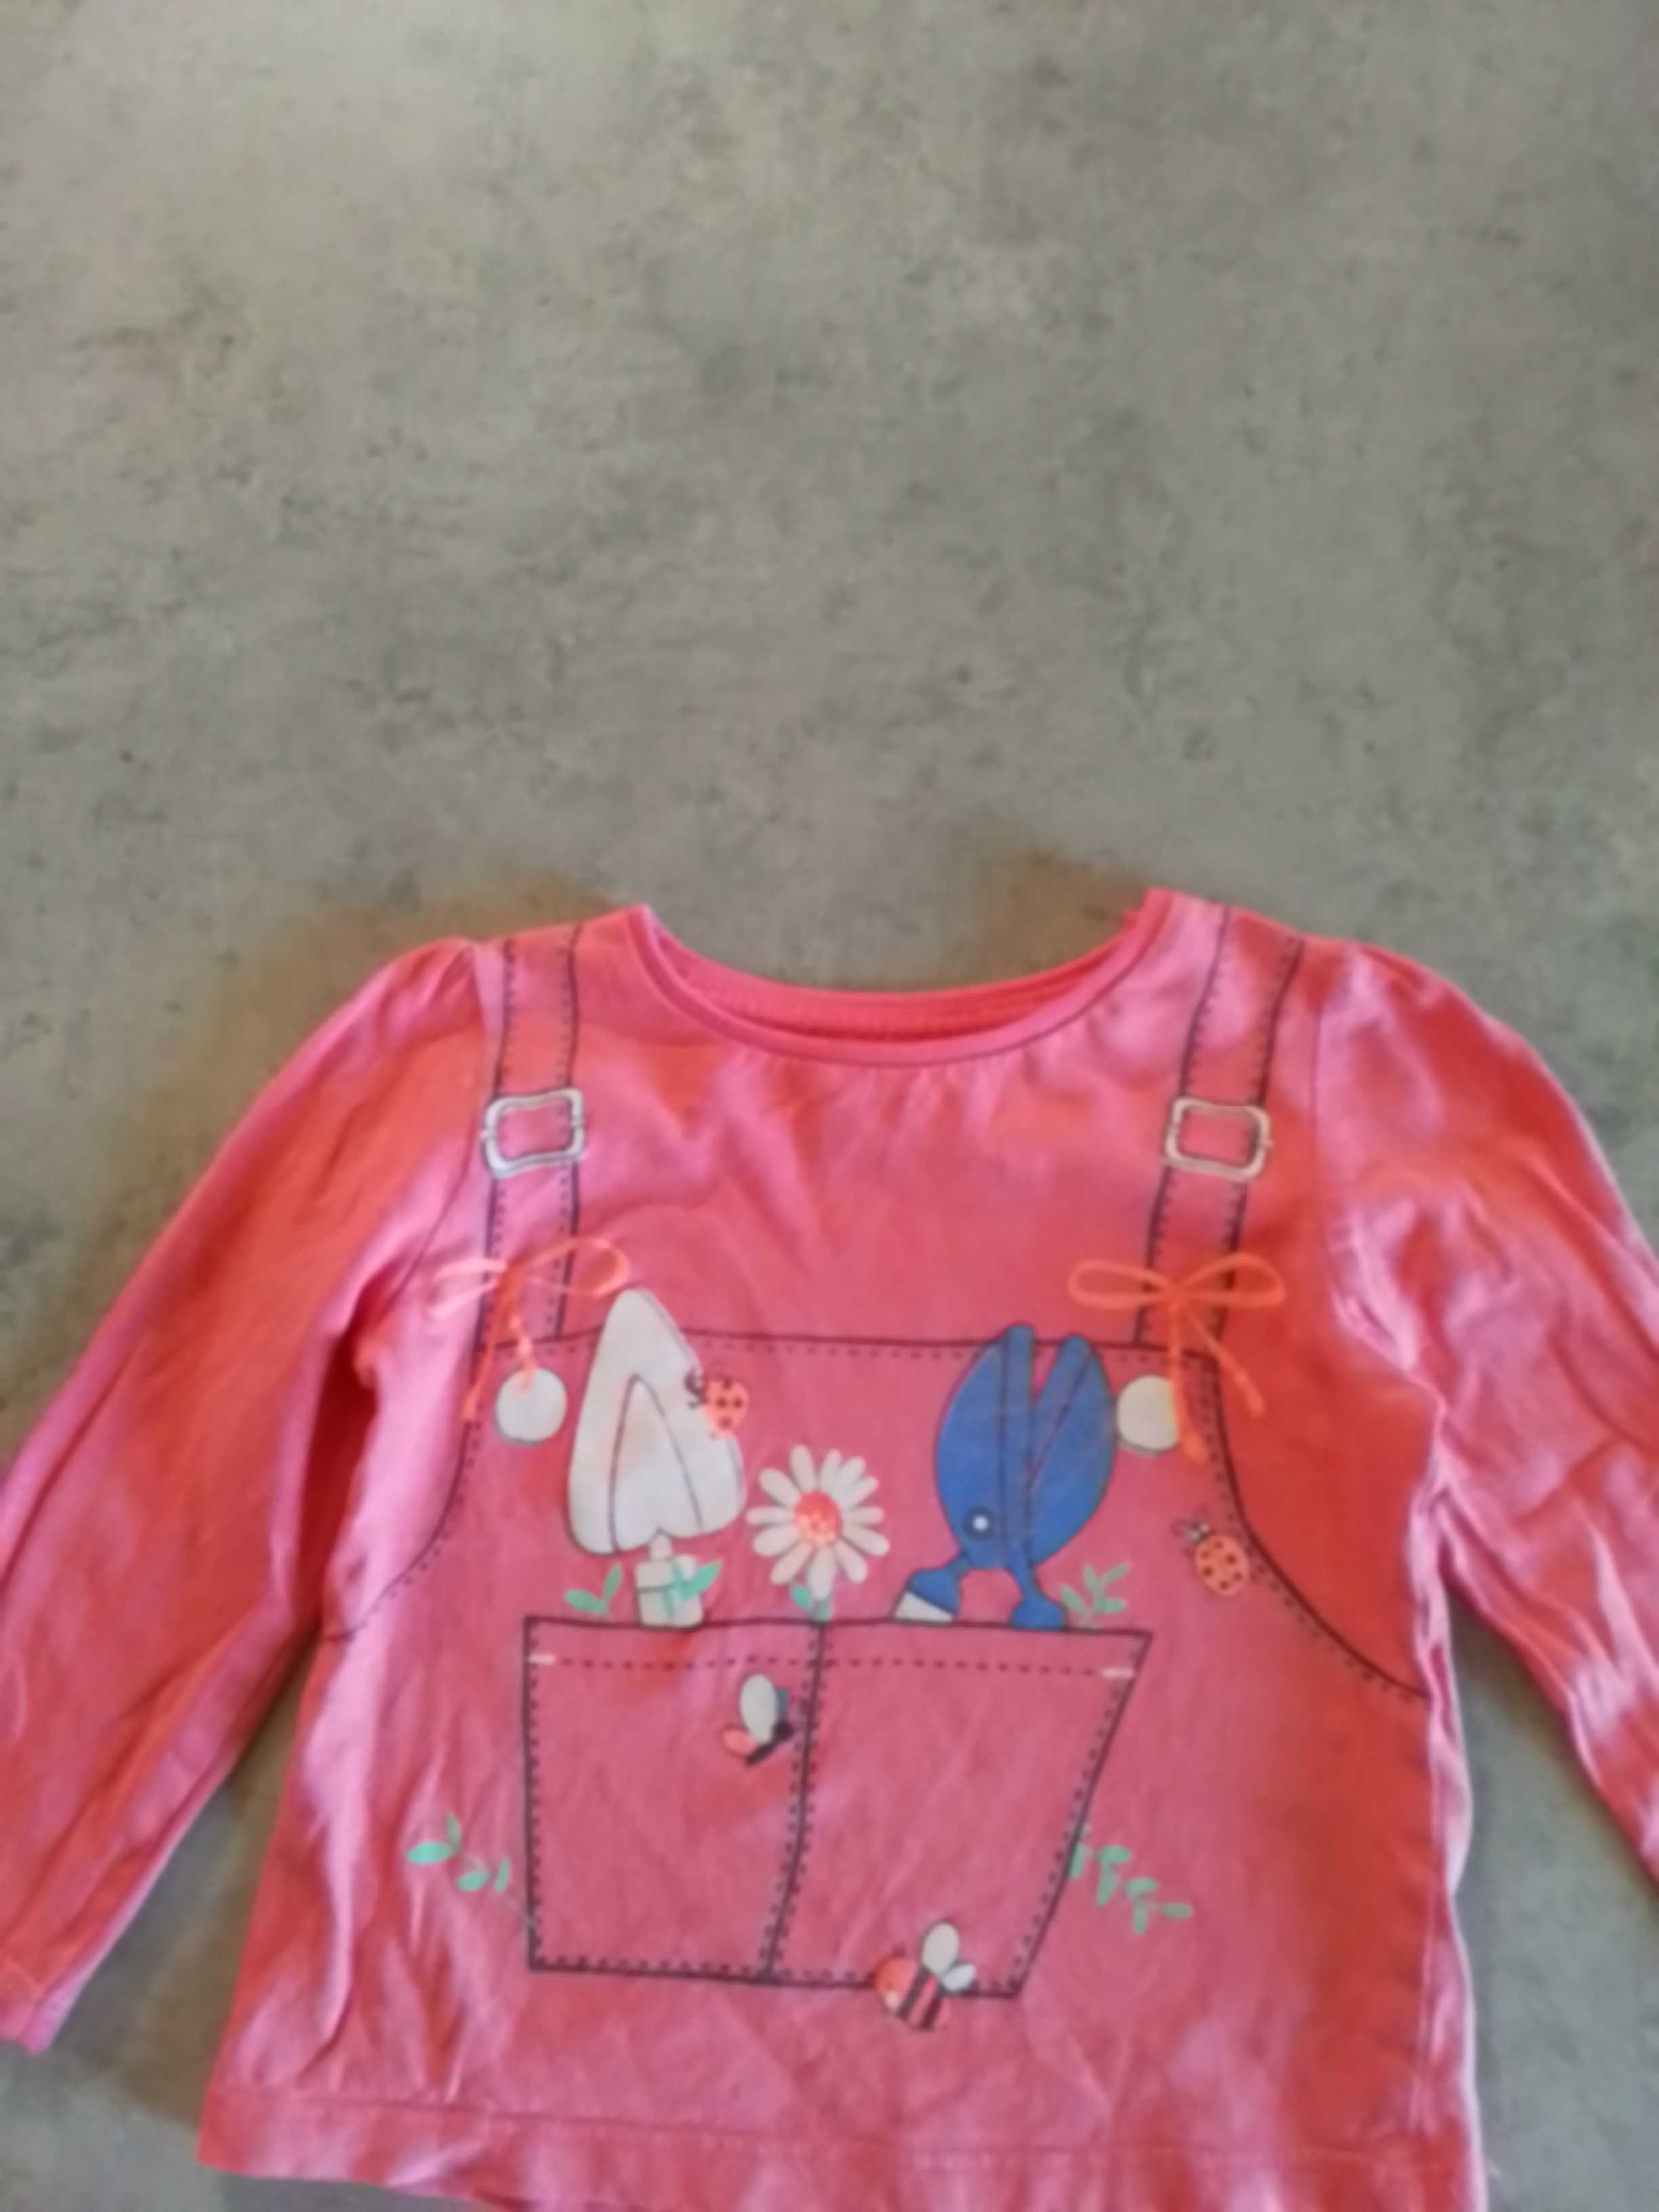 Bluze fetite bebelusi  diferite modele  Nr. 68/74